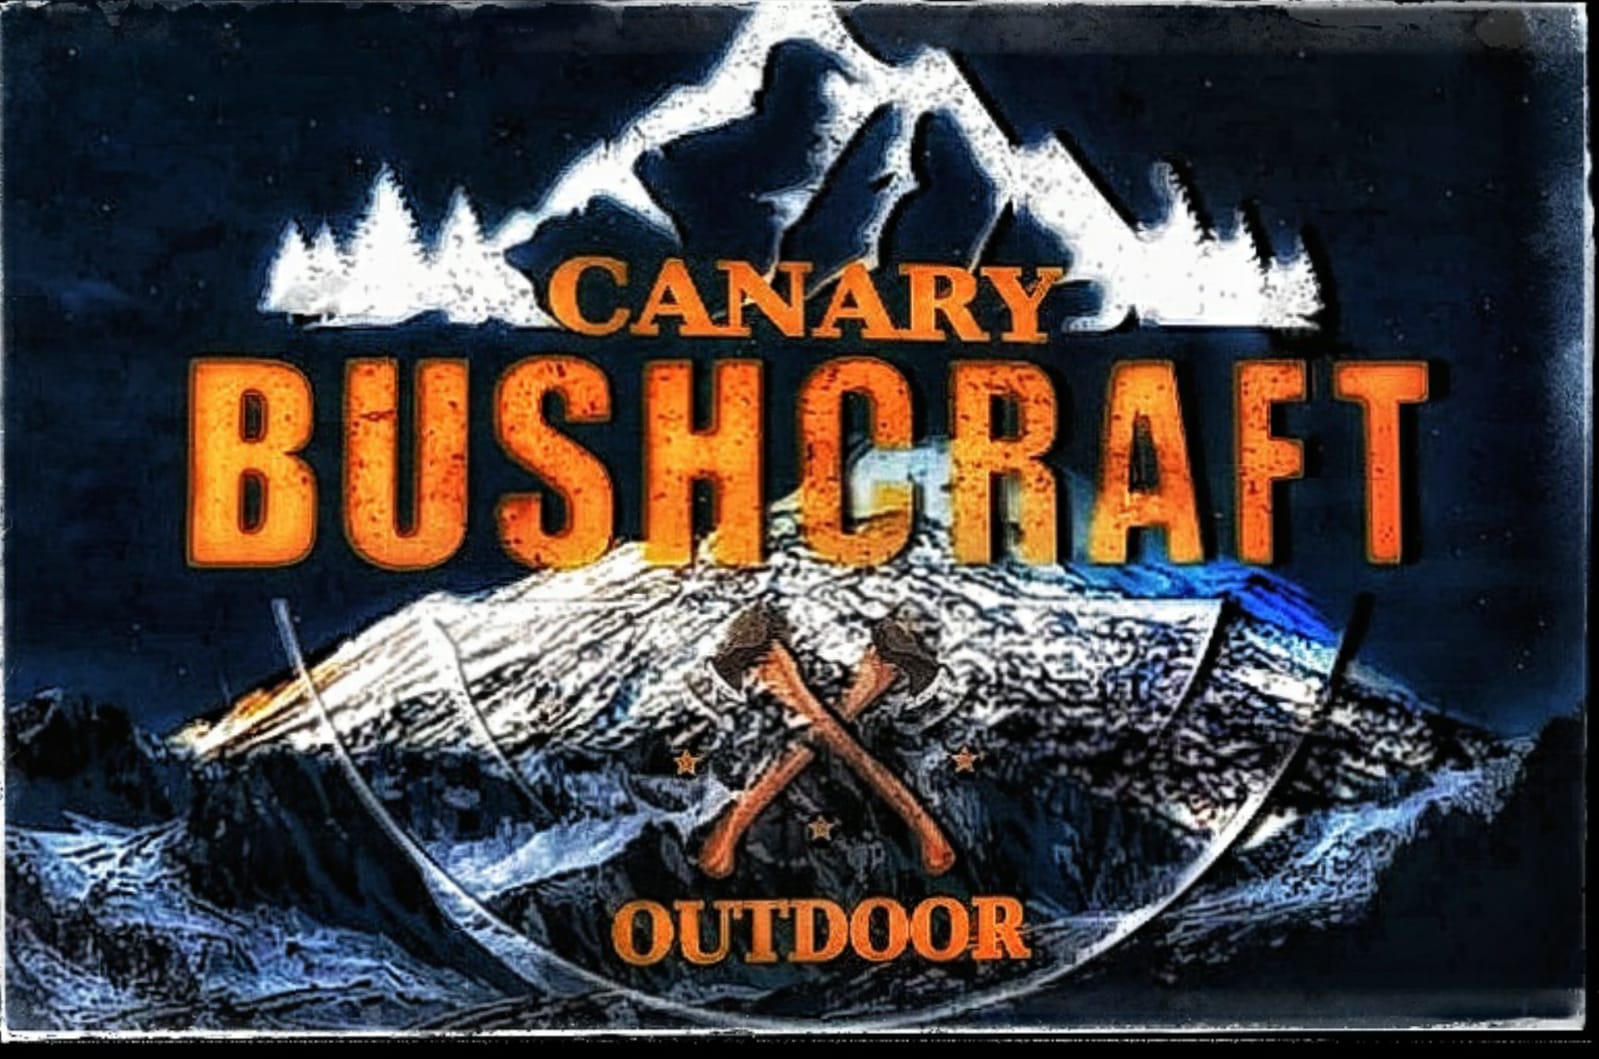 Canary Bushcraft Outdoor